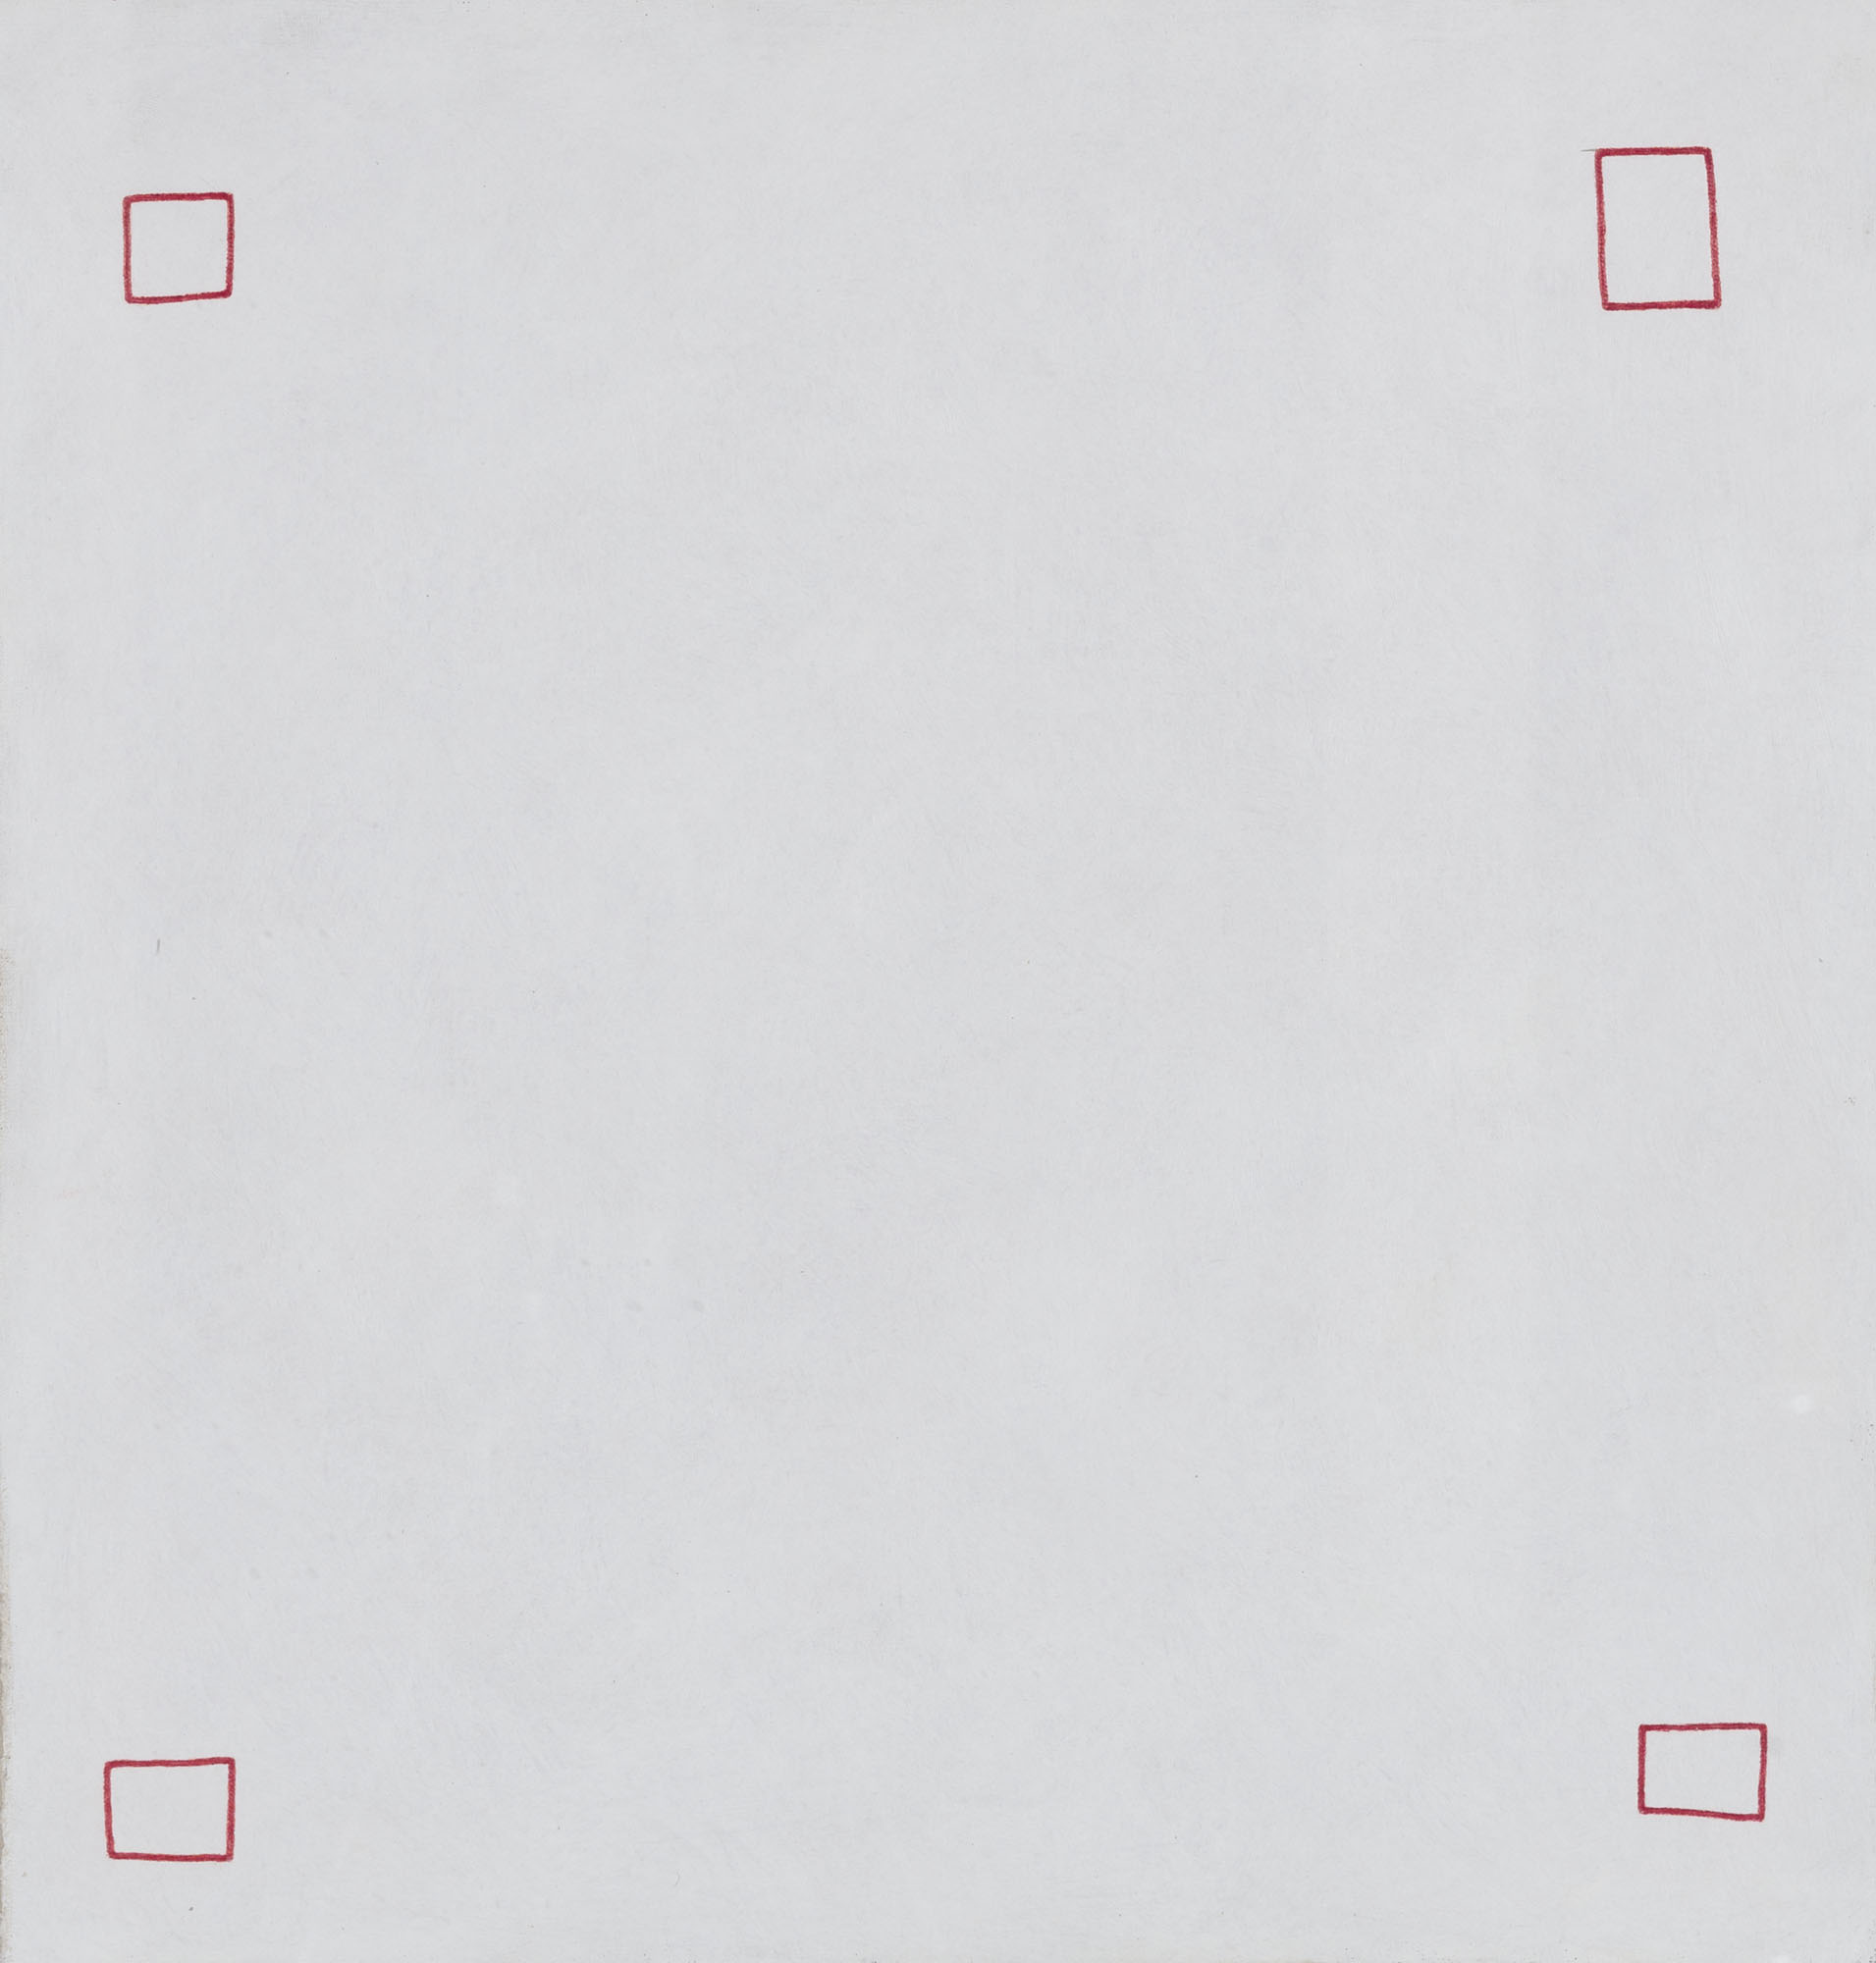 Dragomir Ugren<br><br>Bez naziva (1982)<br>akril boja na platnu kaširanom na medijapan<br>42 cm × 40 cm<br><br>Reprodukovana u knjizi Radikalna apstrakcija<br>Beograd 2013.